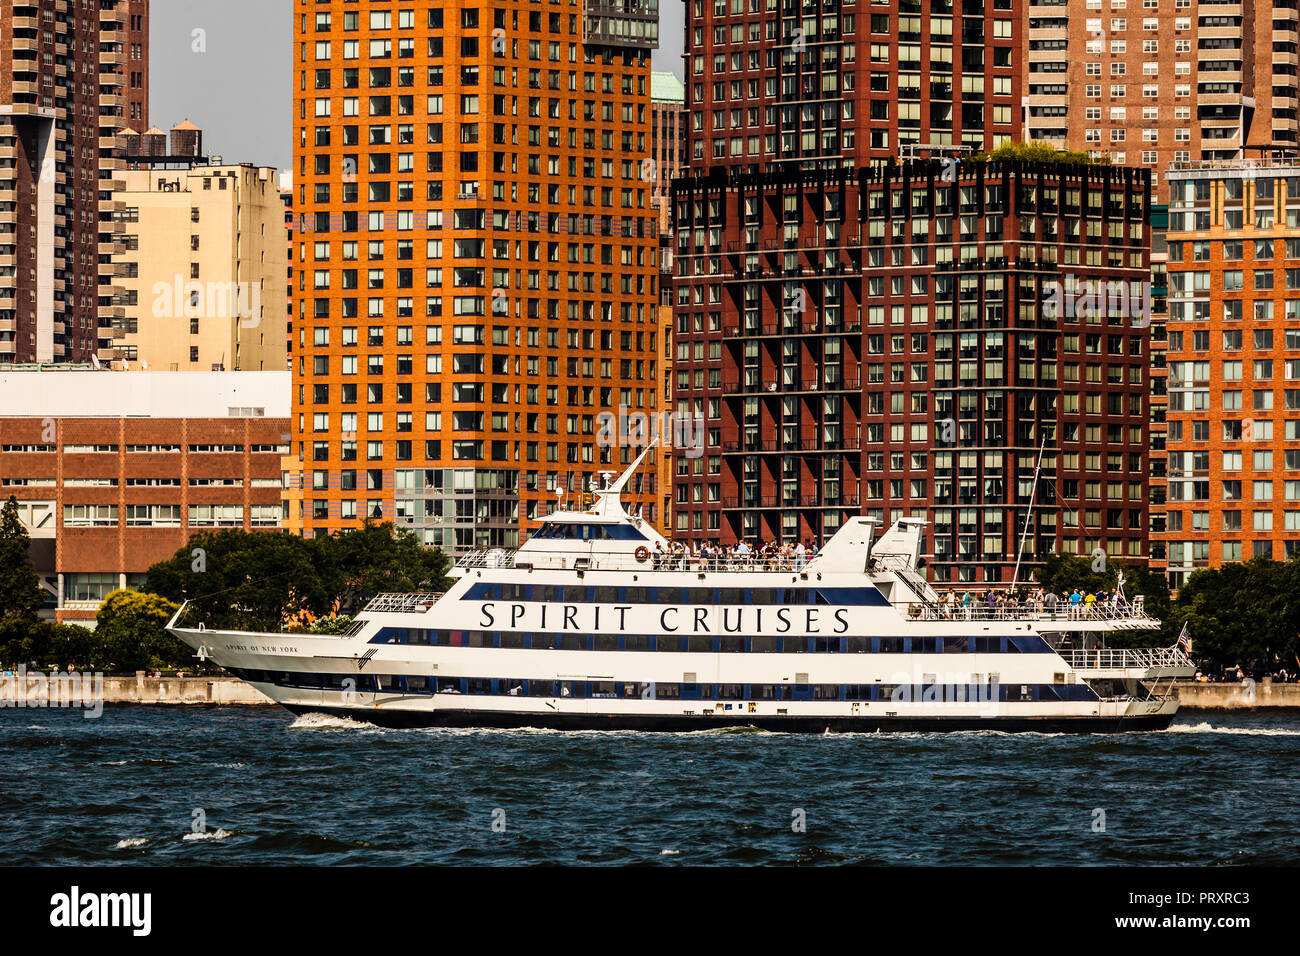 Spirit of Cruses Le port de New York Manhattan - New York, New York, USA Banque D'Images